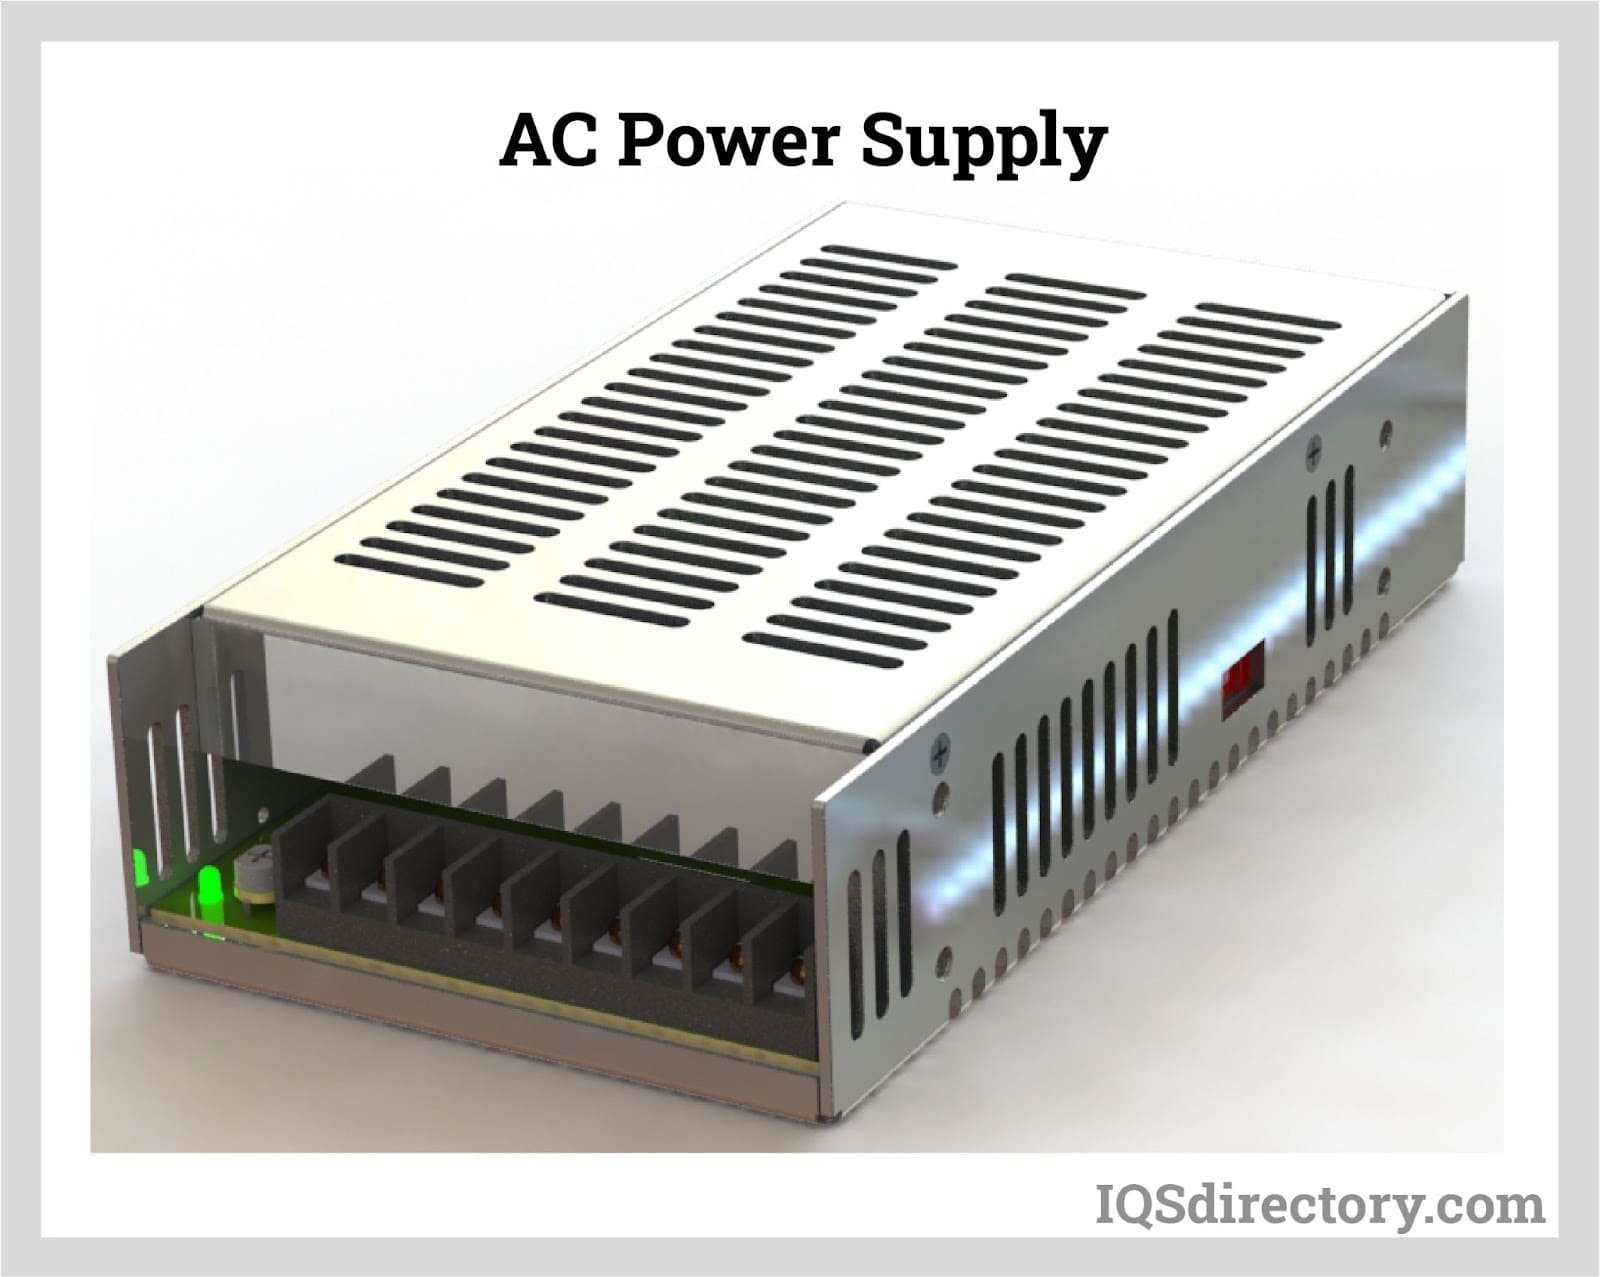 AC Power Supply